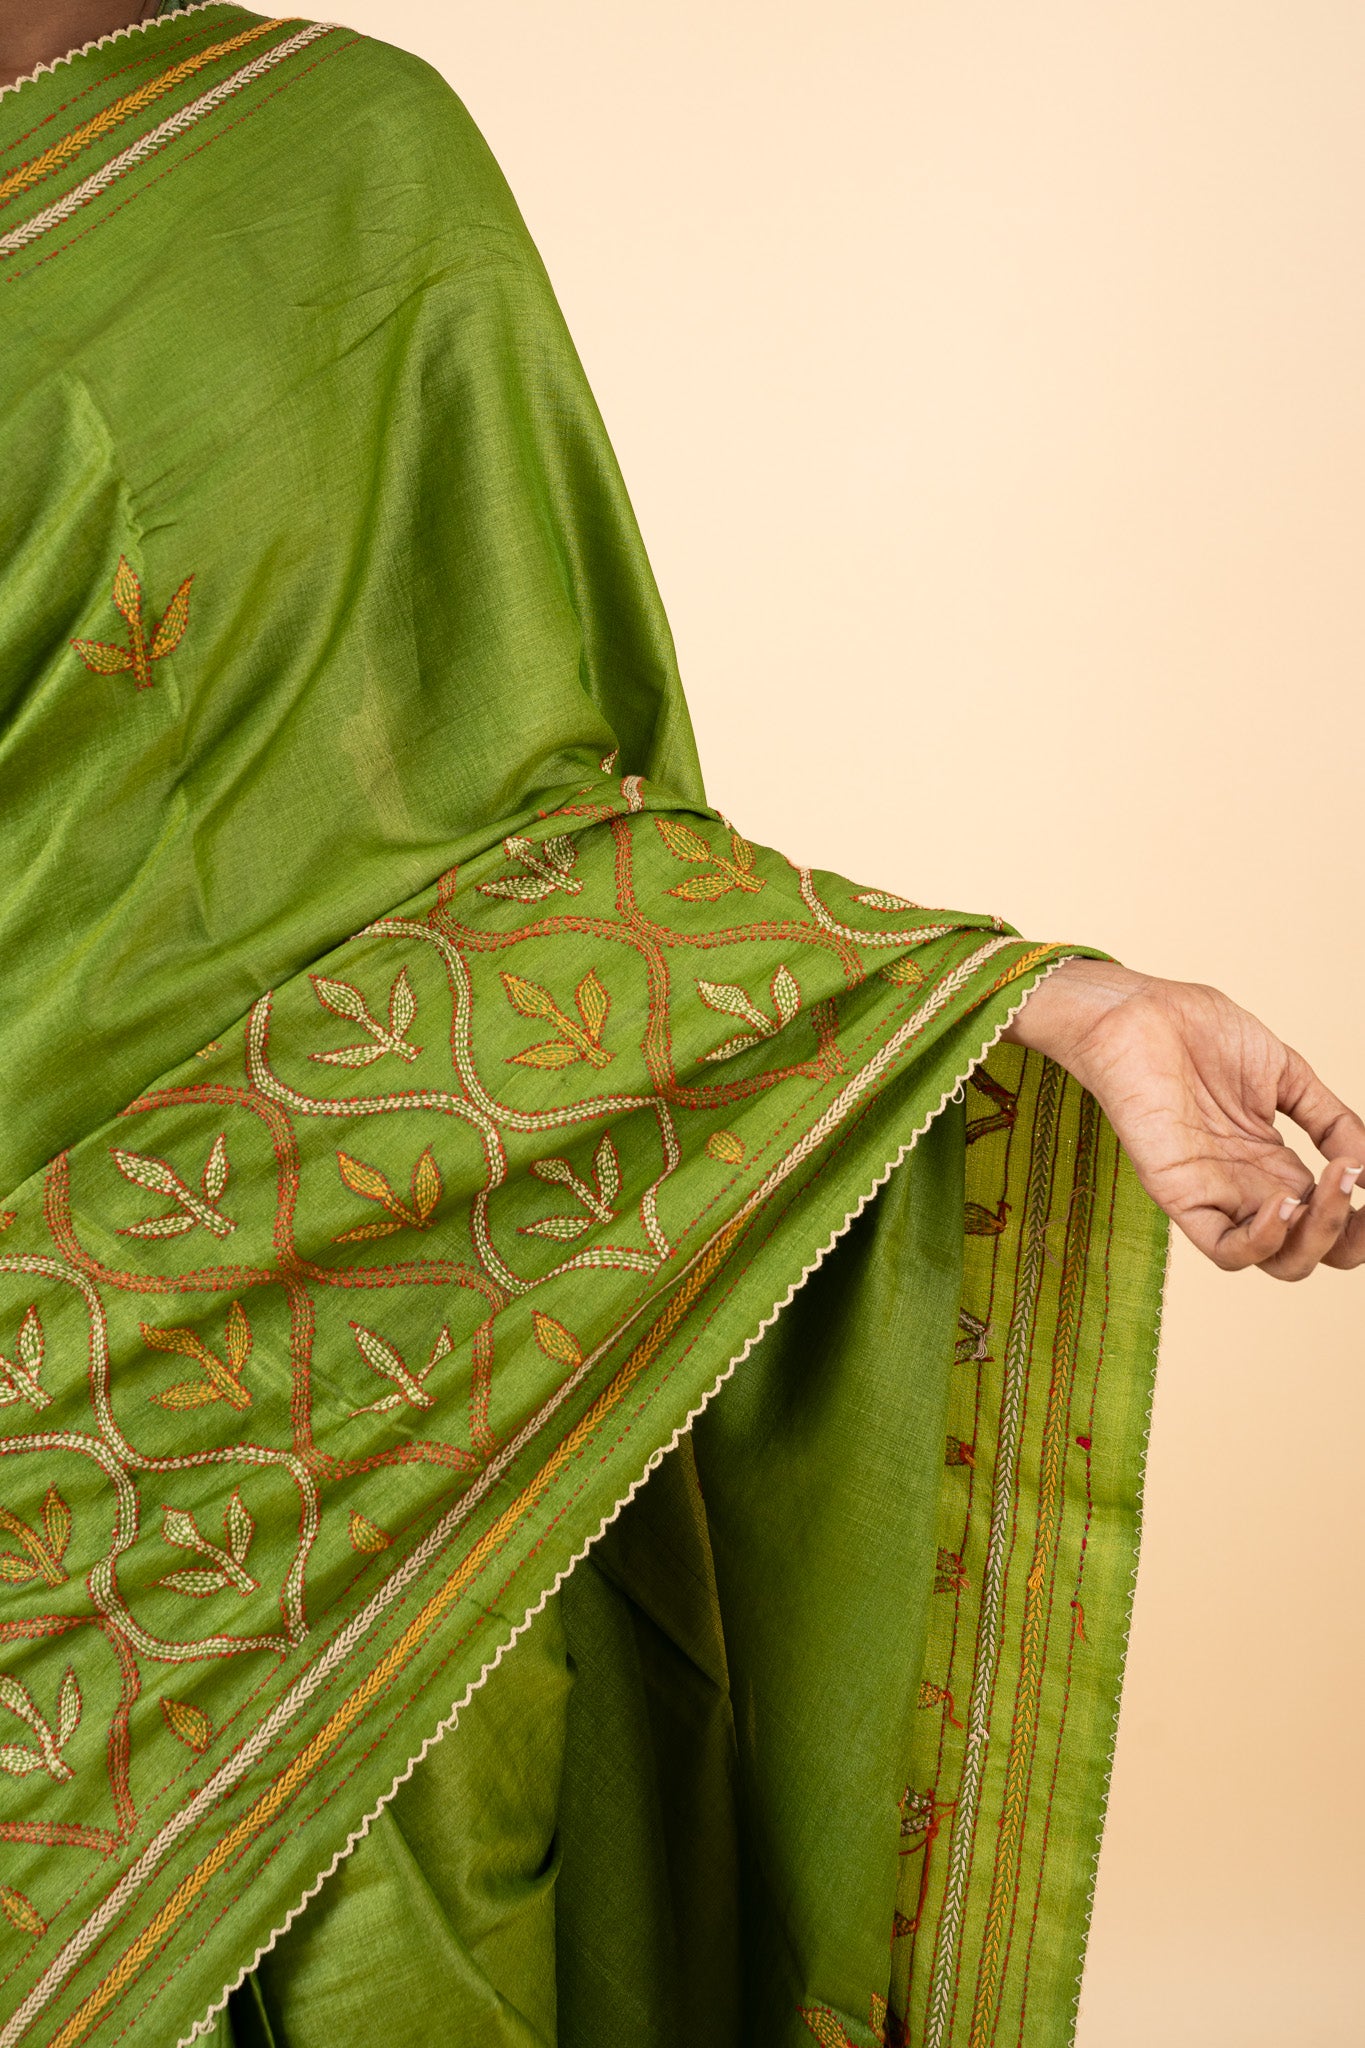 Pear Green Embroidered Pure Tussar Saree - Clio Silks